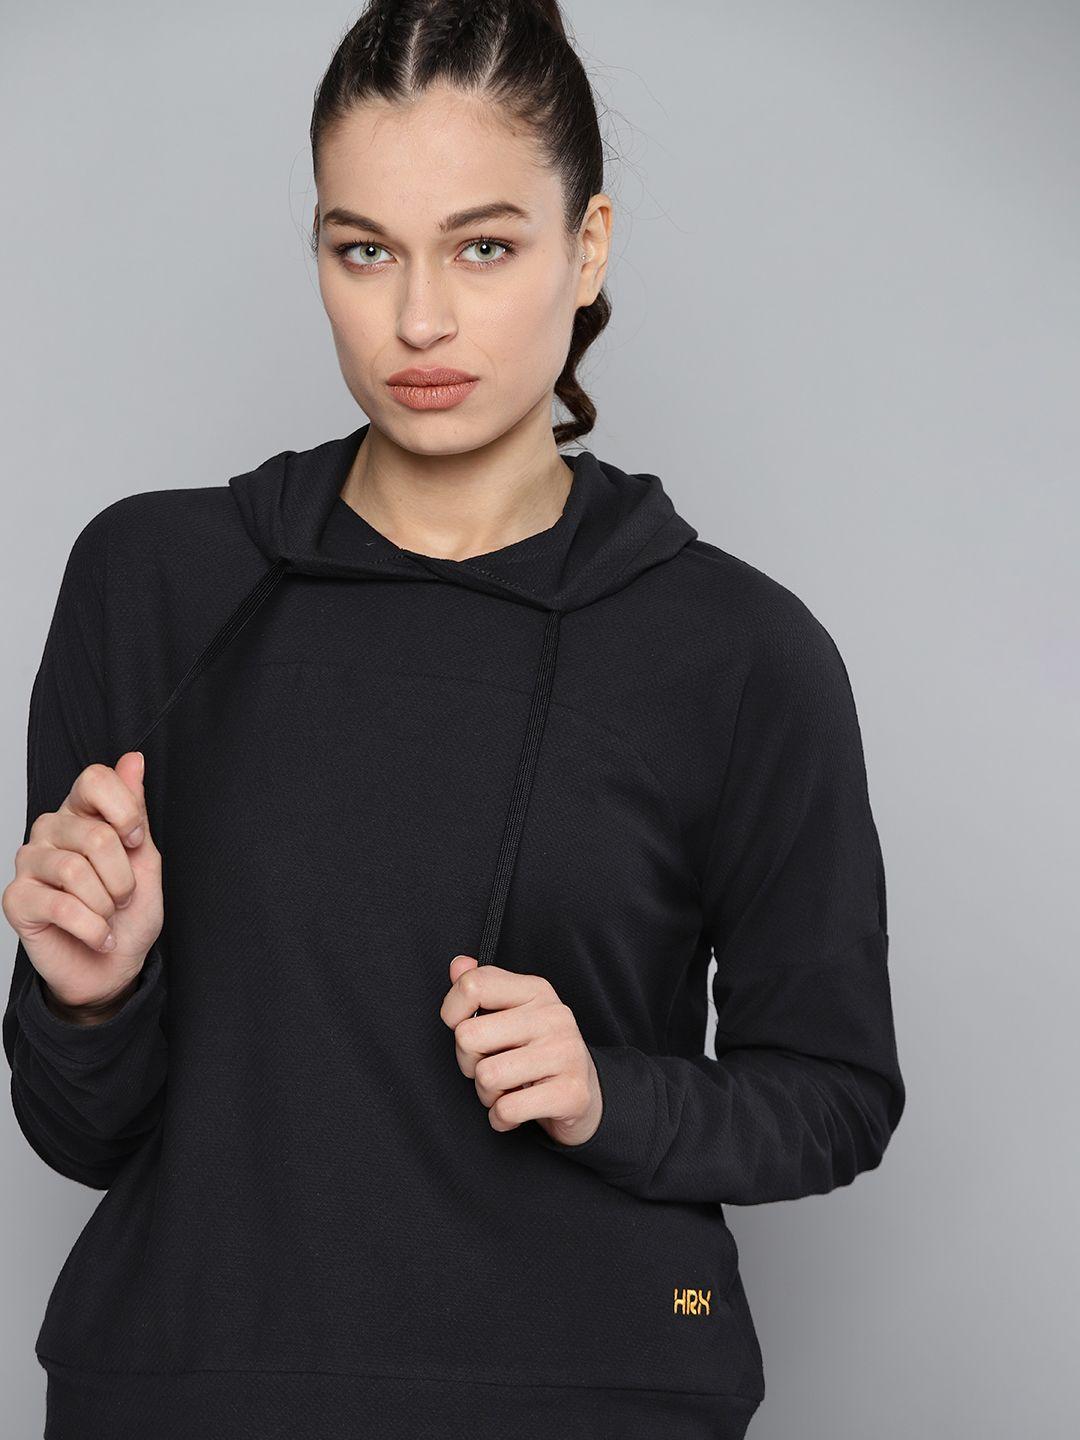 hrx by hrithik roshan lifestyle women jet black rapid-dry solid sweatshirt